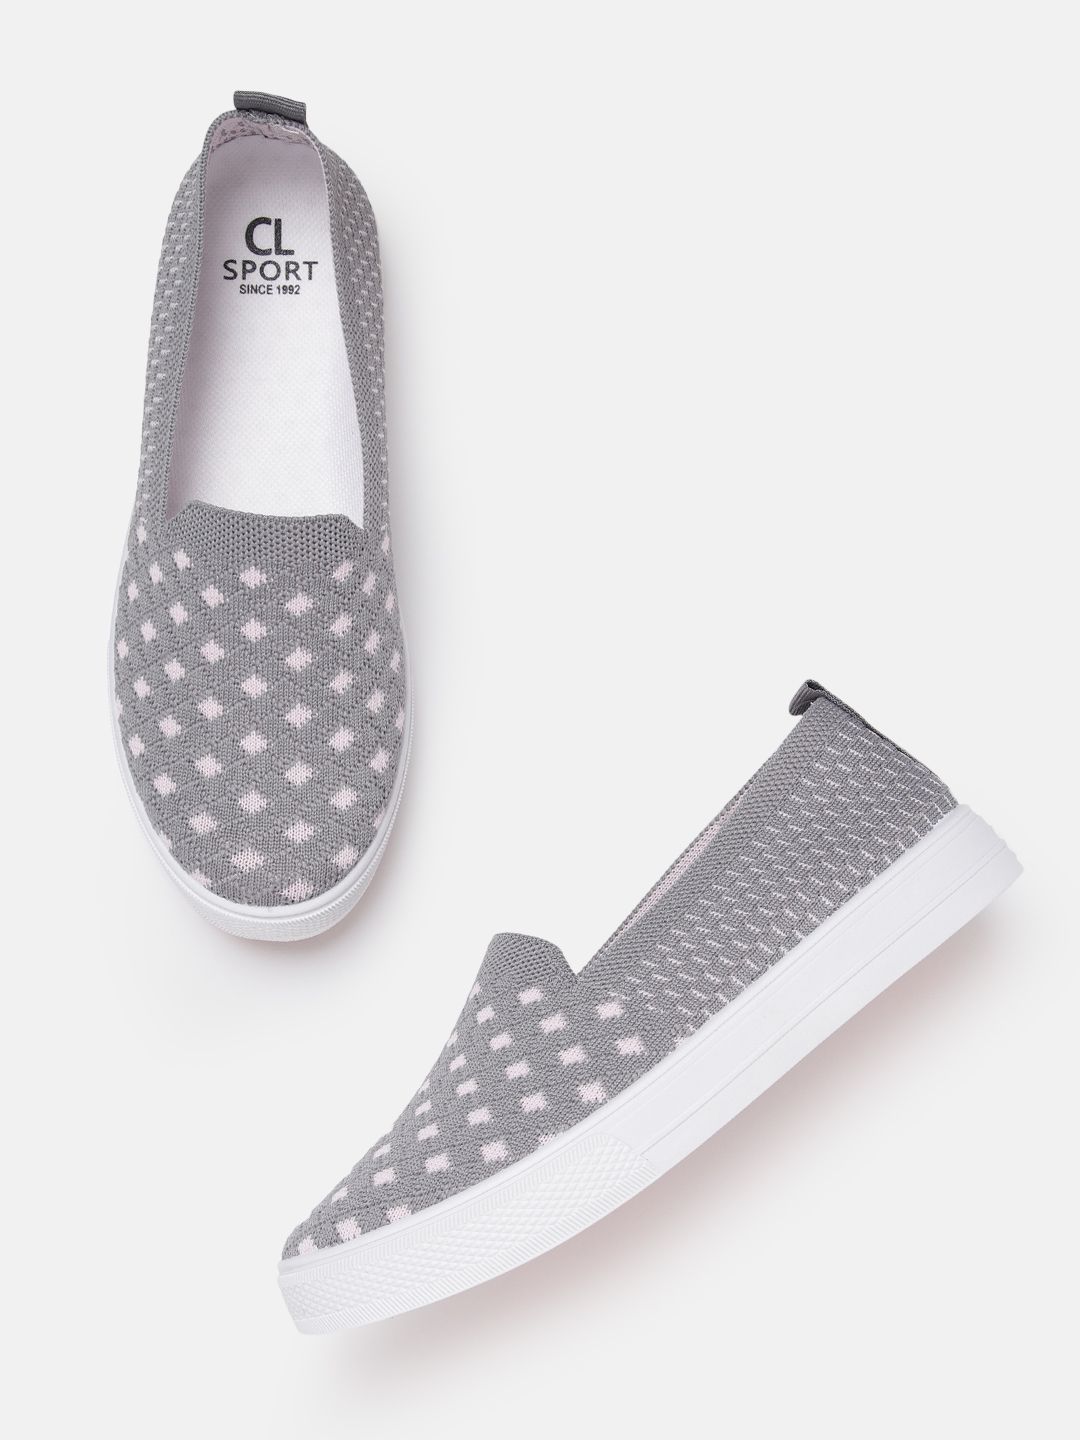 Carlton London sports Women Grey & Pink Geometric Woven Design Slip-On Sneakers Price in India